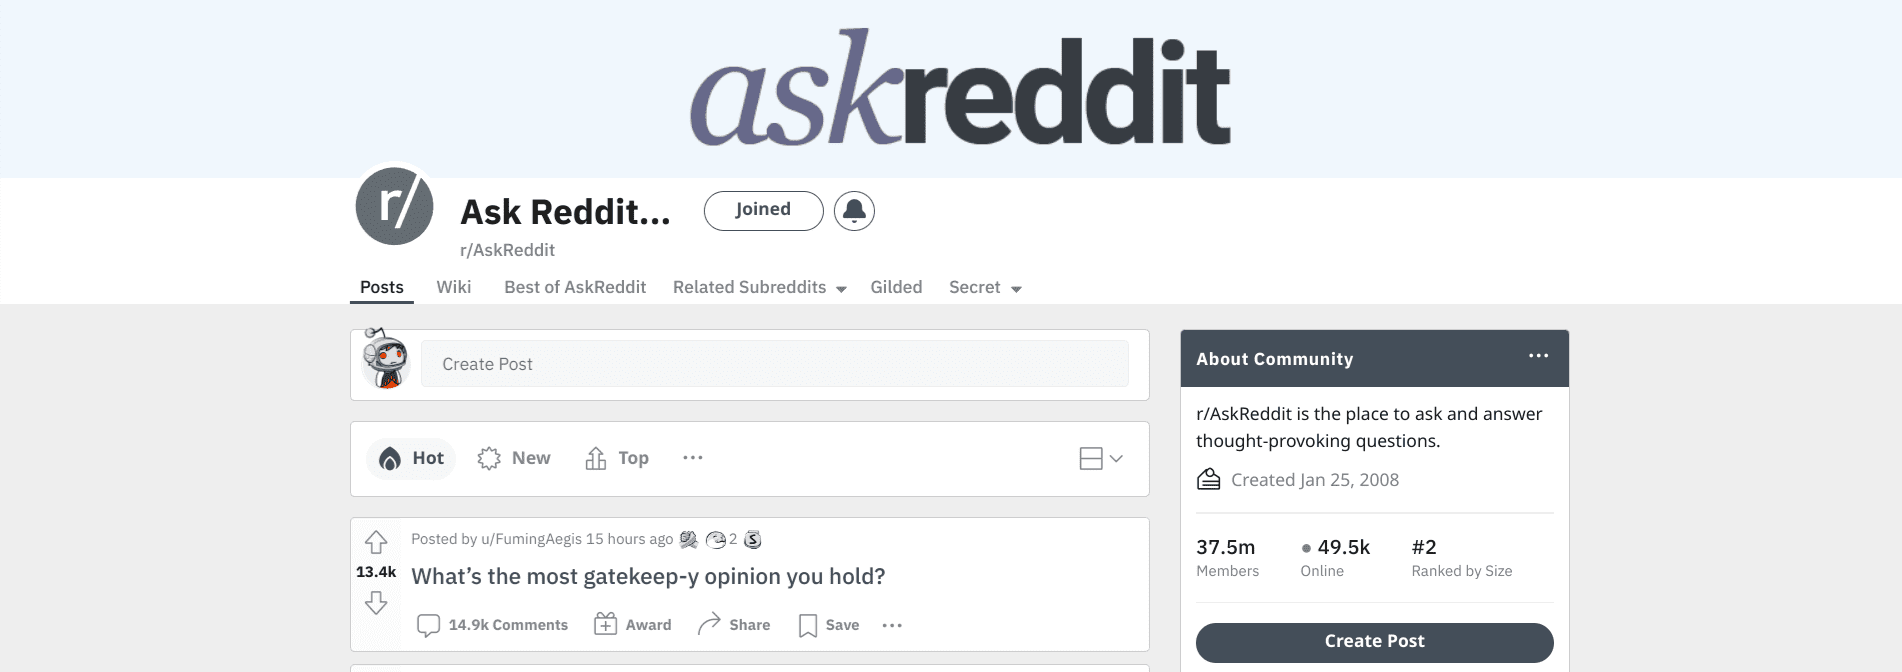 The Ask Reddit community